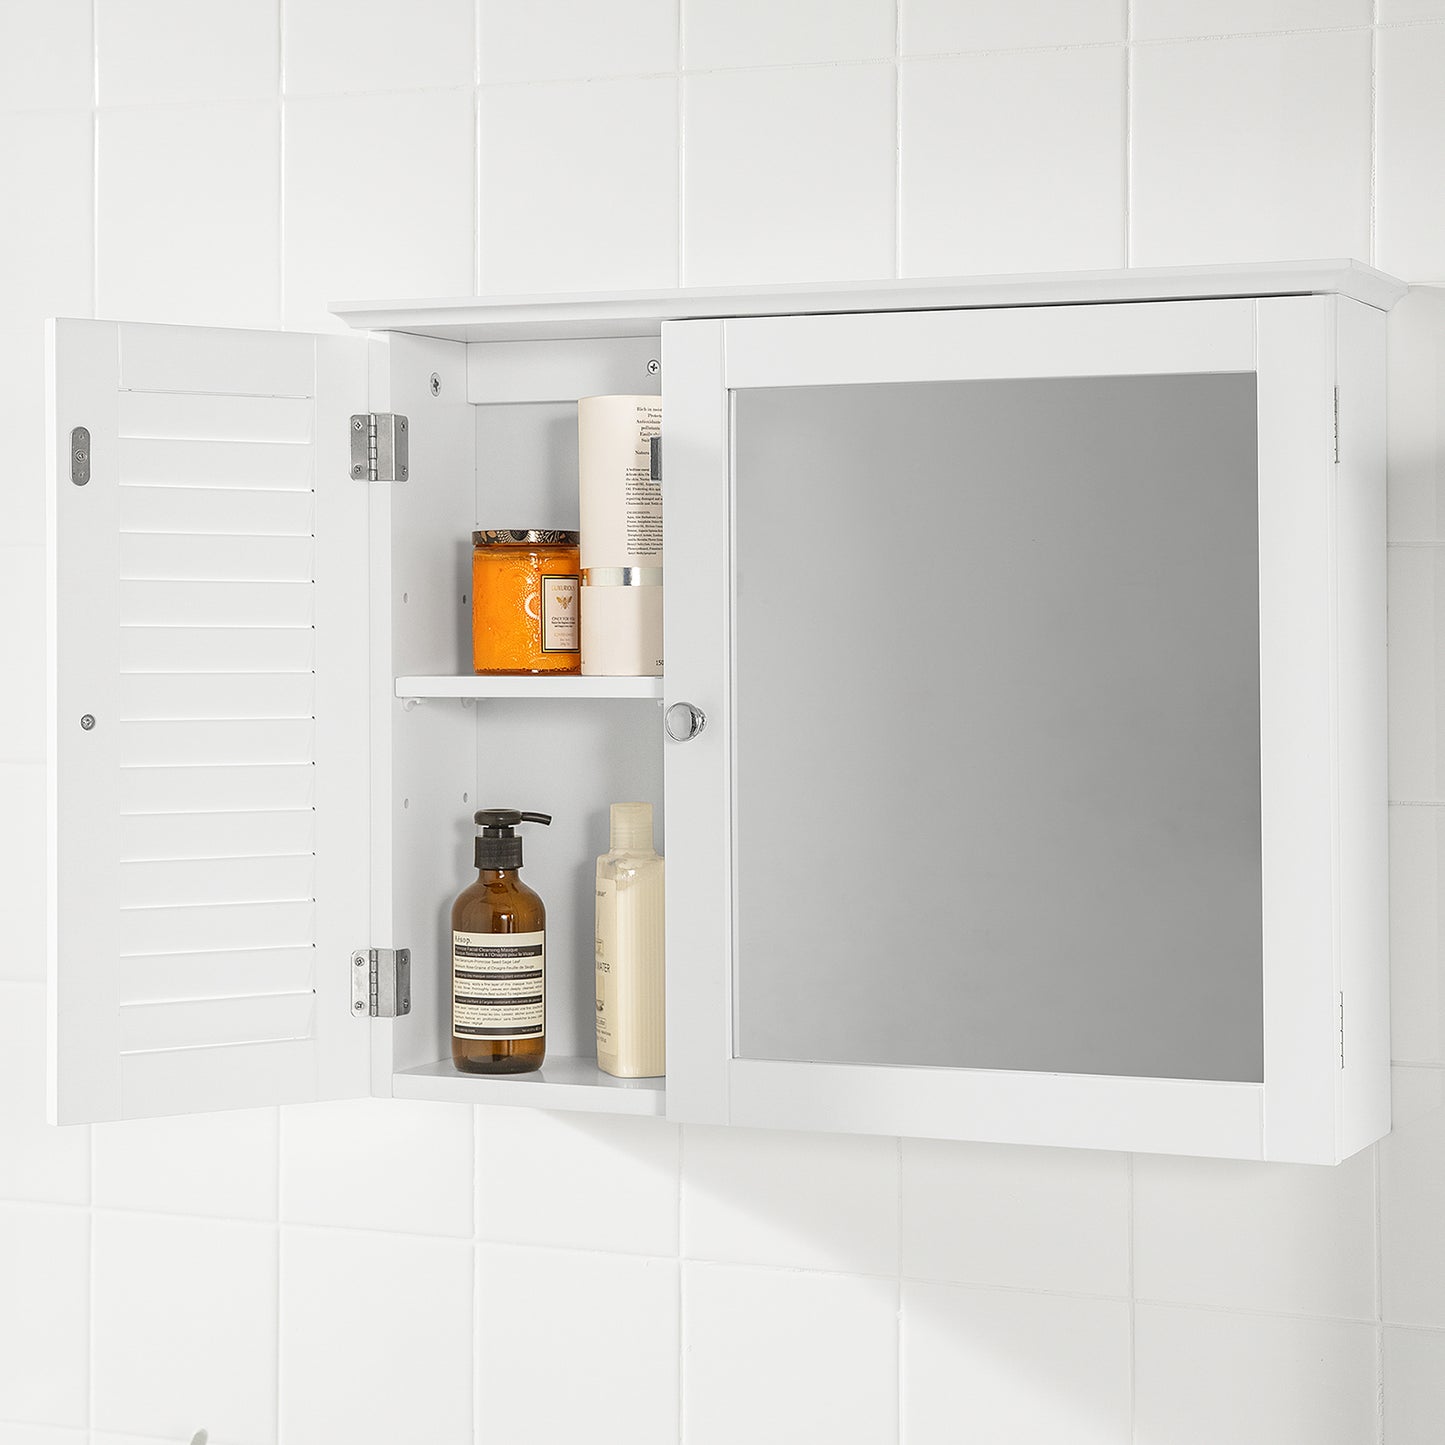 SoBuy Bathroom Wall Mirror Cabinet with Slat Door Wall Cupboard with Mirrored Door White